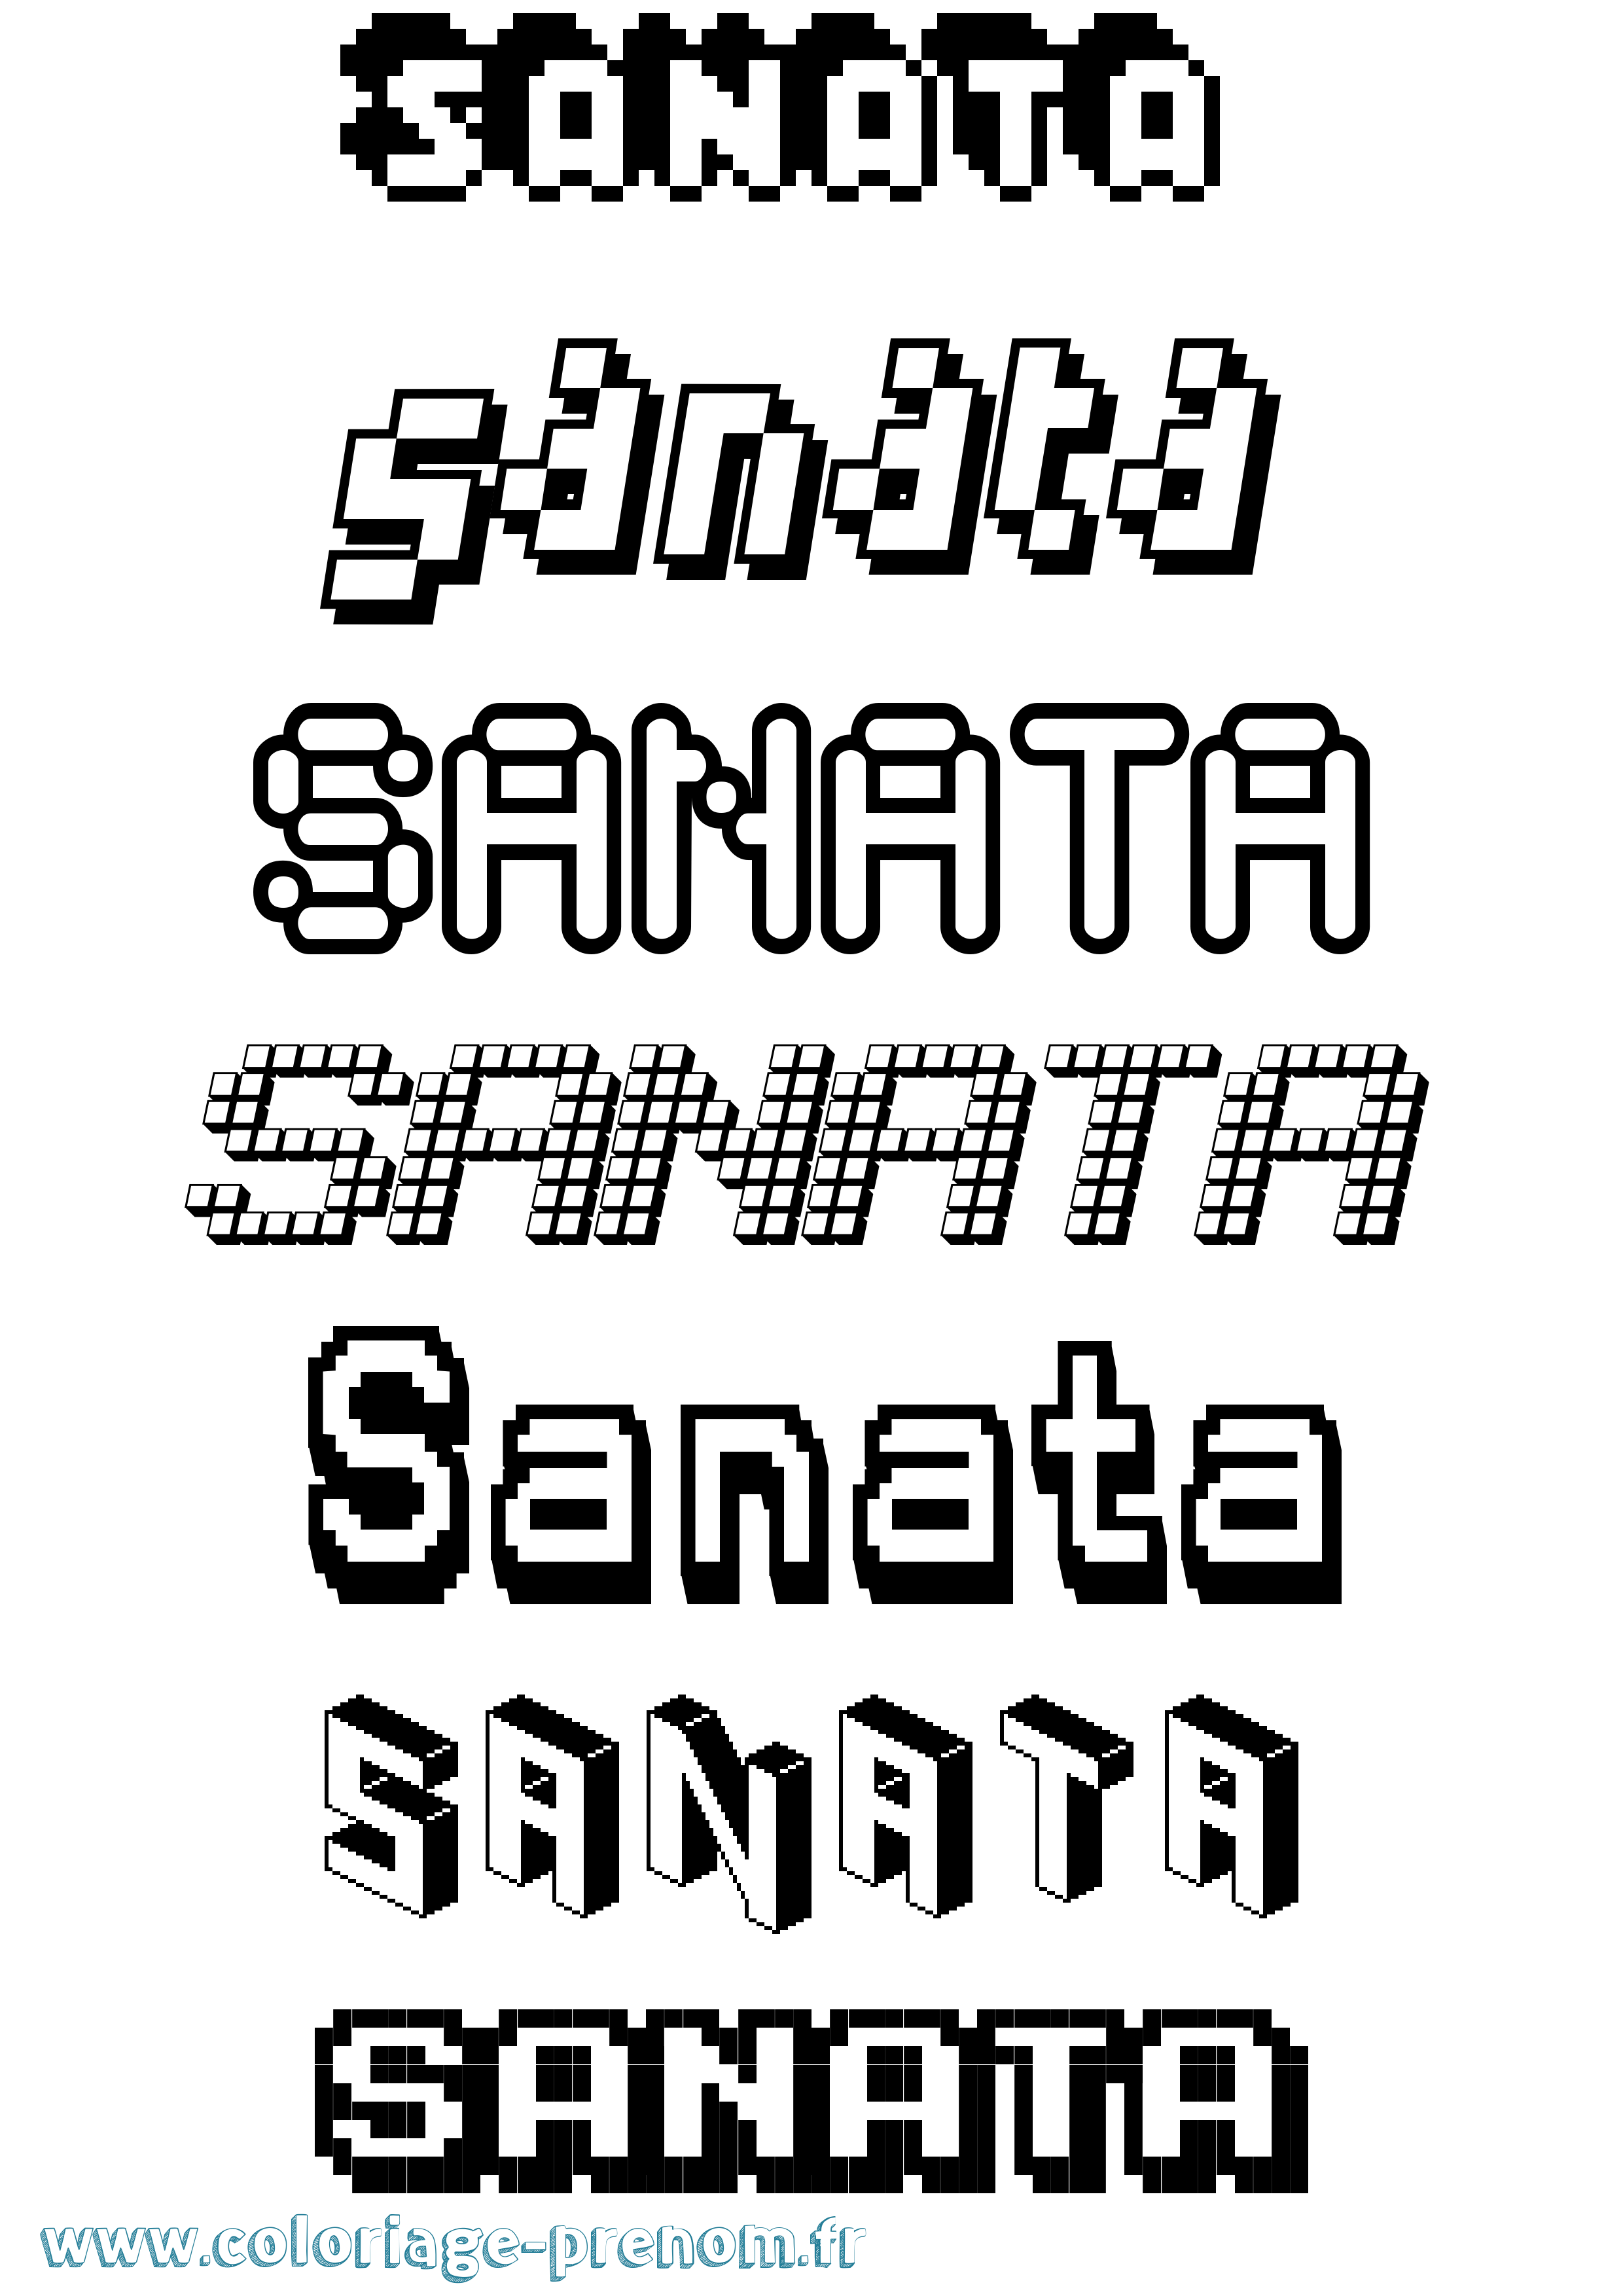 Coloriage prénom Sanata Pixel